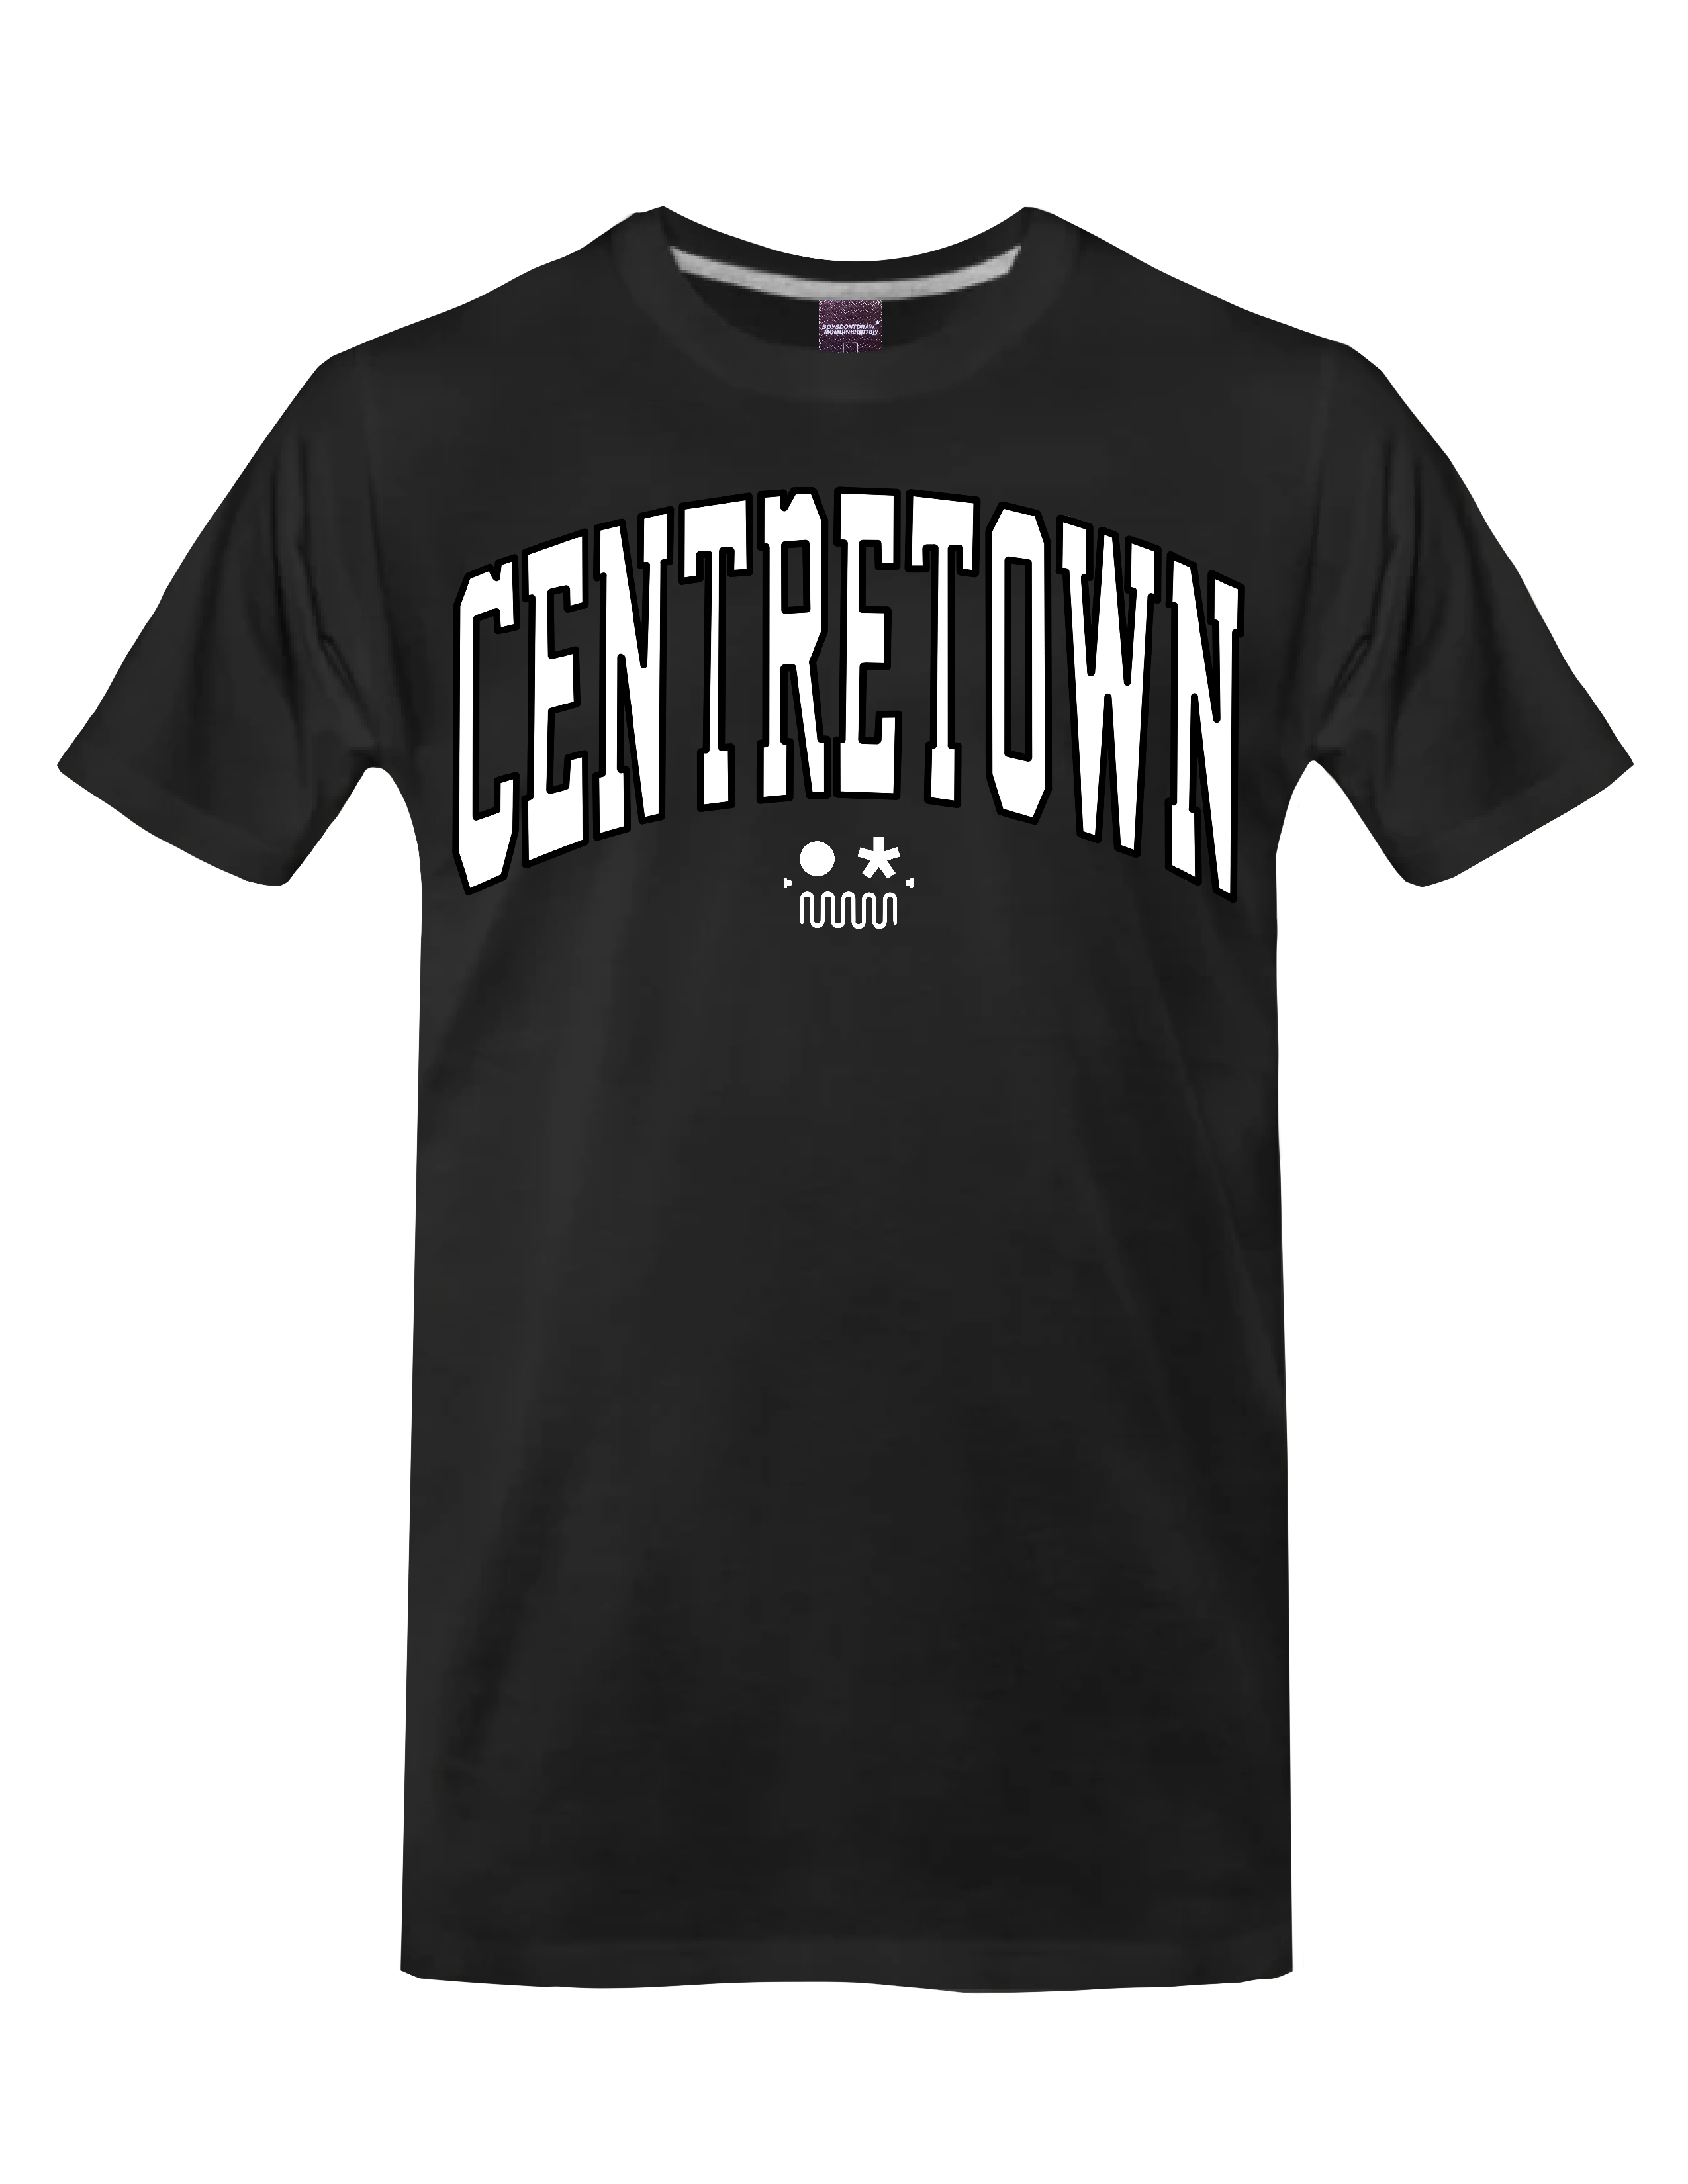 CENTRETOWN* // OTTAWA Arch Logo - T-Shirt by BOYSDONTDRAW